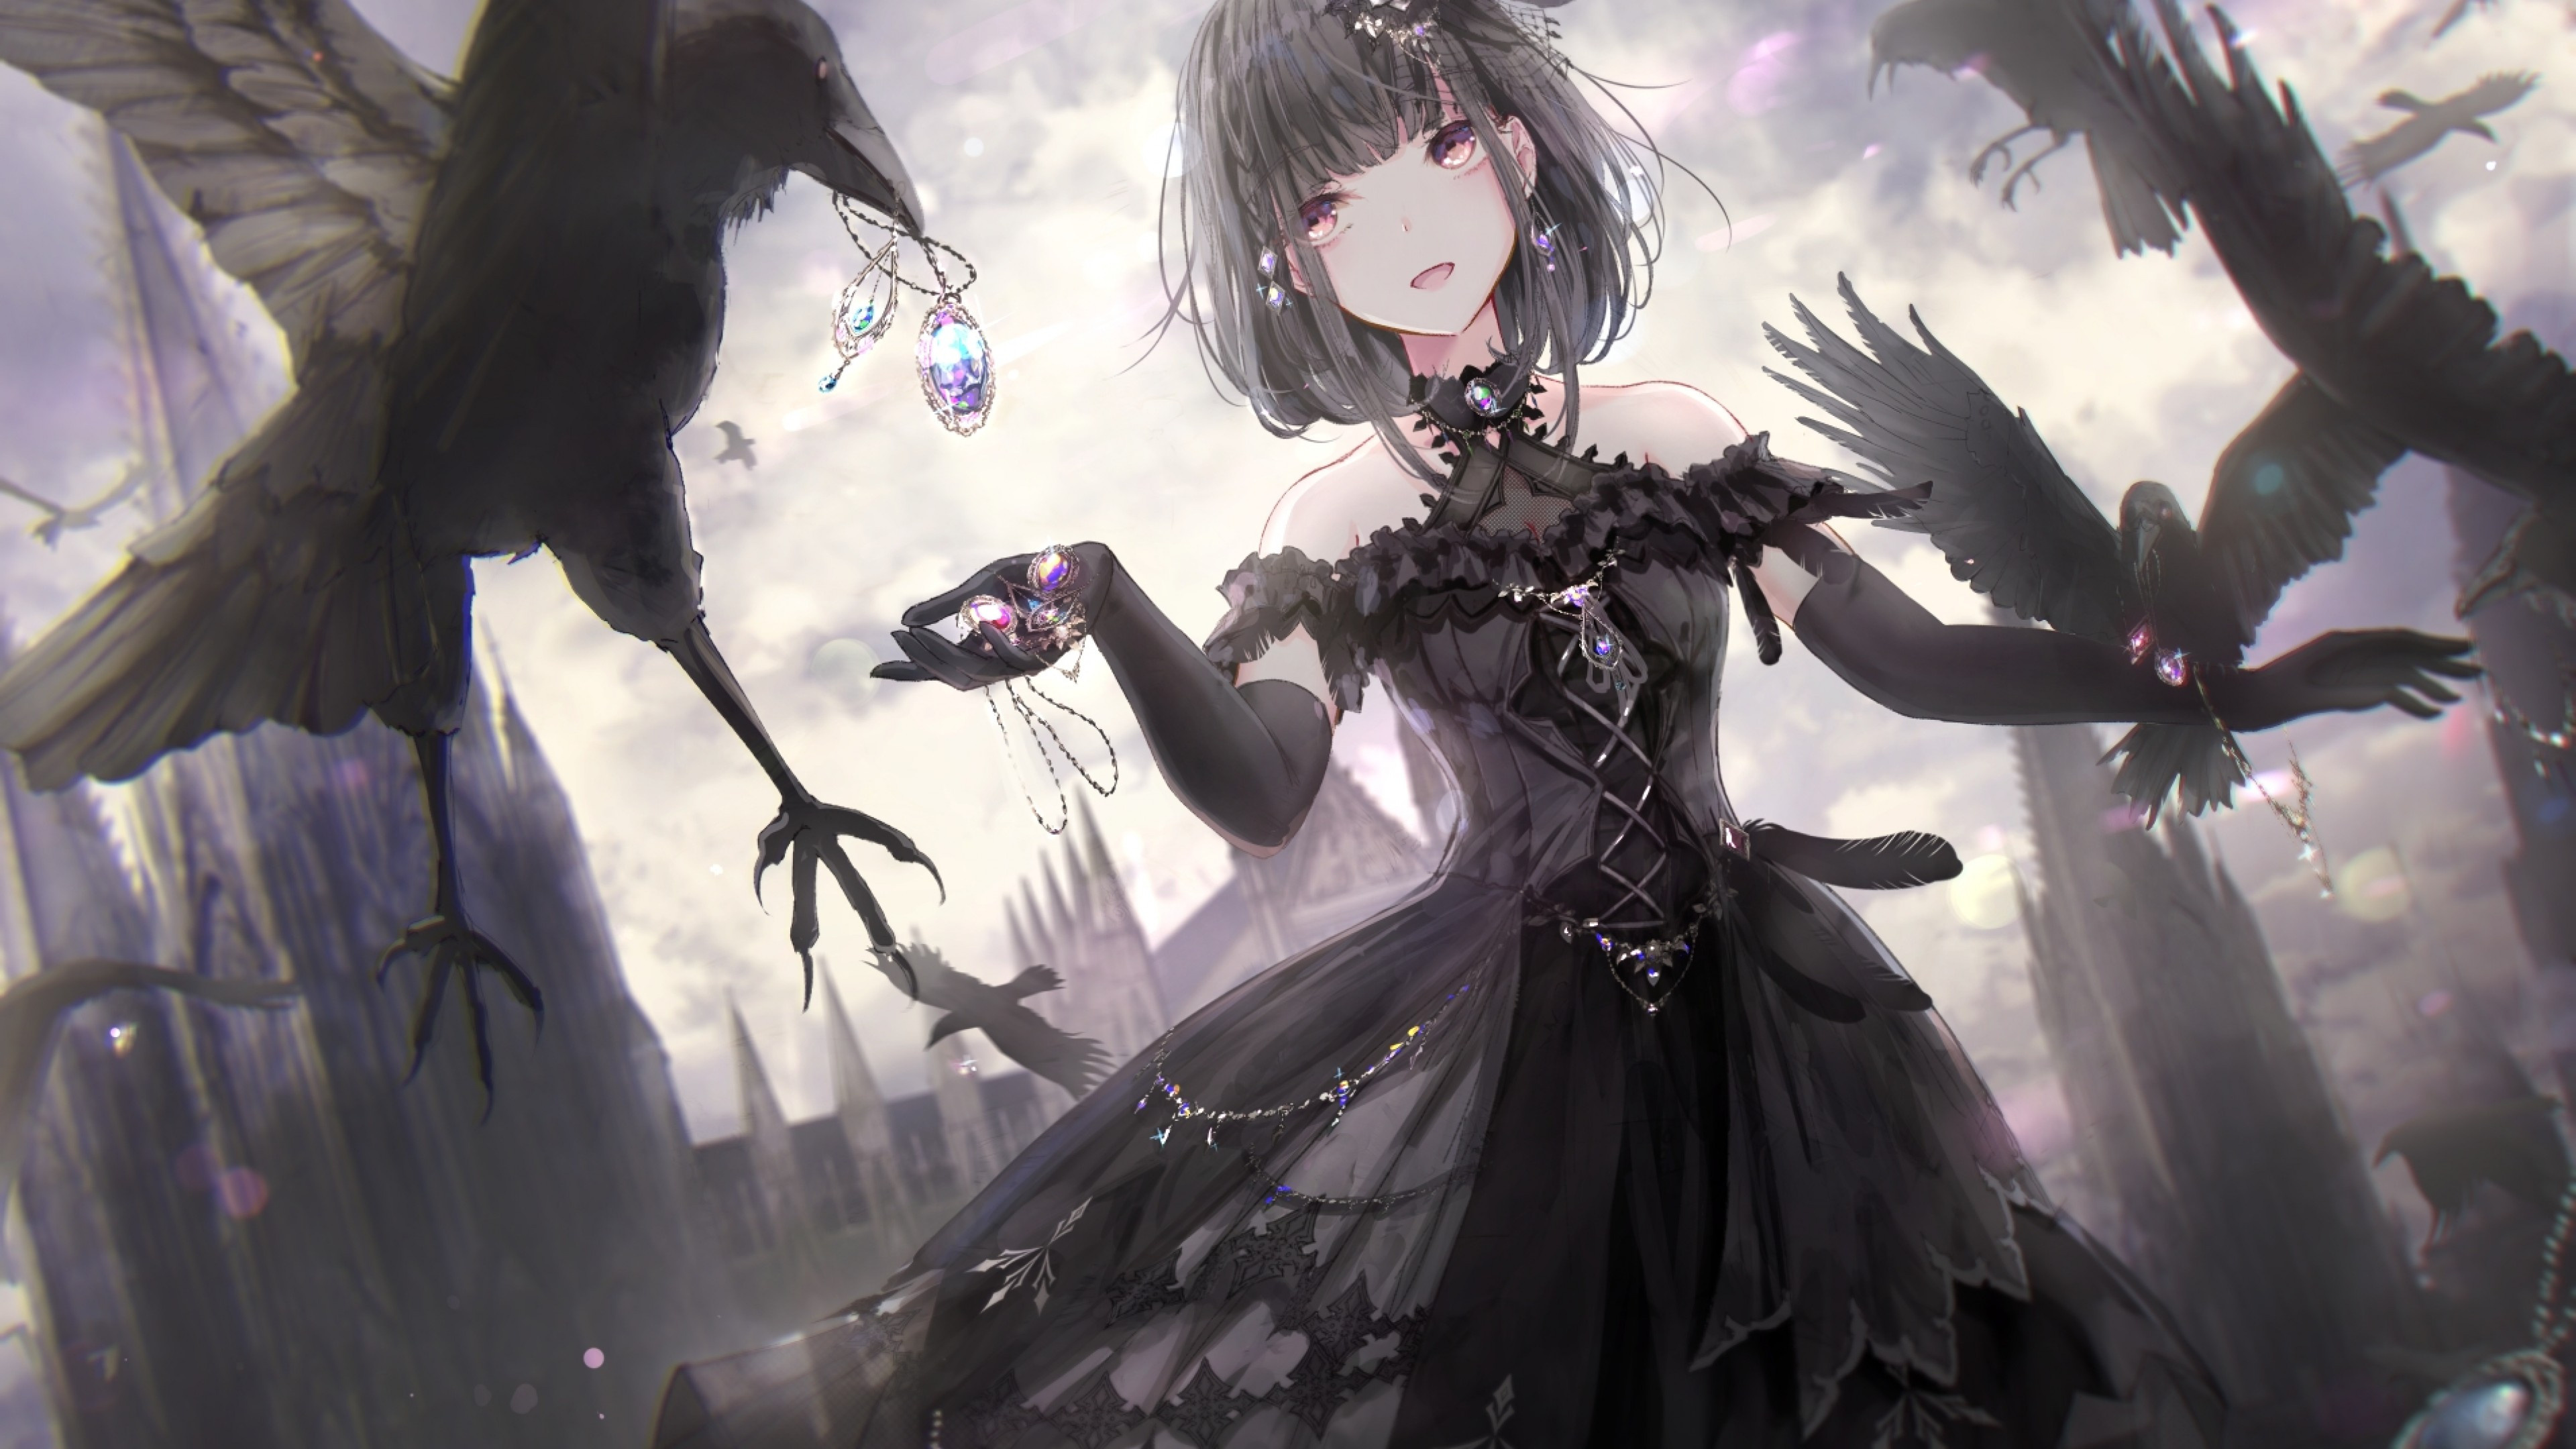 Gothic Anime: Darkness, Goth Lolita fashion, Jewelry, Dark fantasy theme, Girl with black ravens. 3840x2160 4K Background.